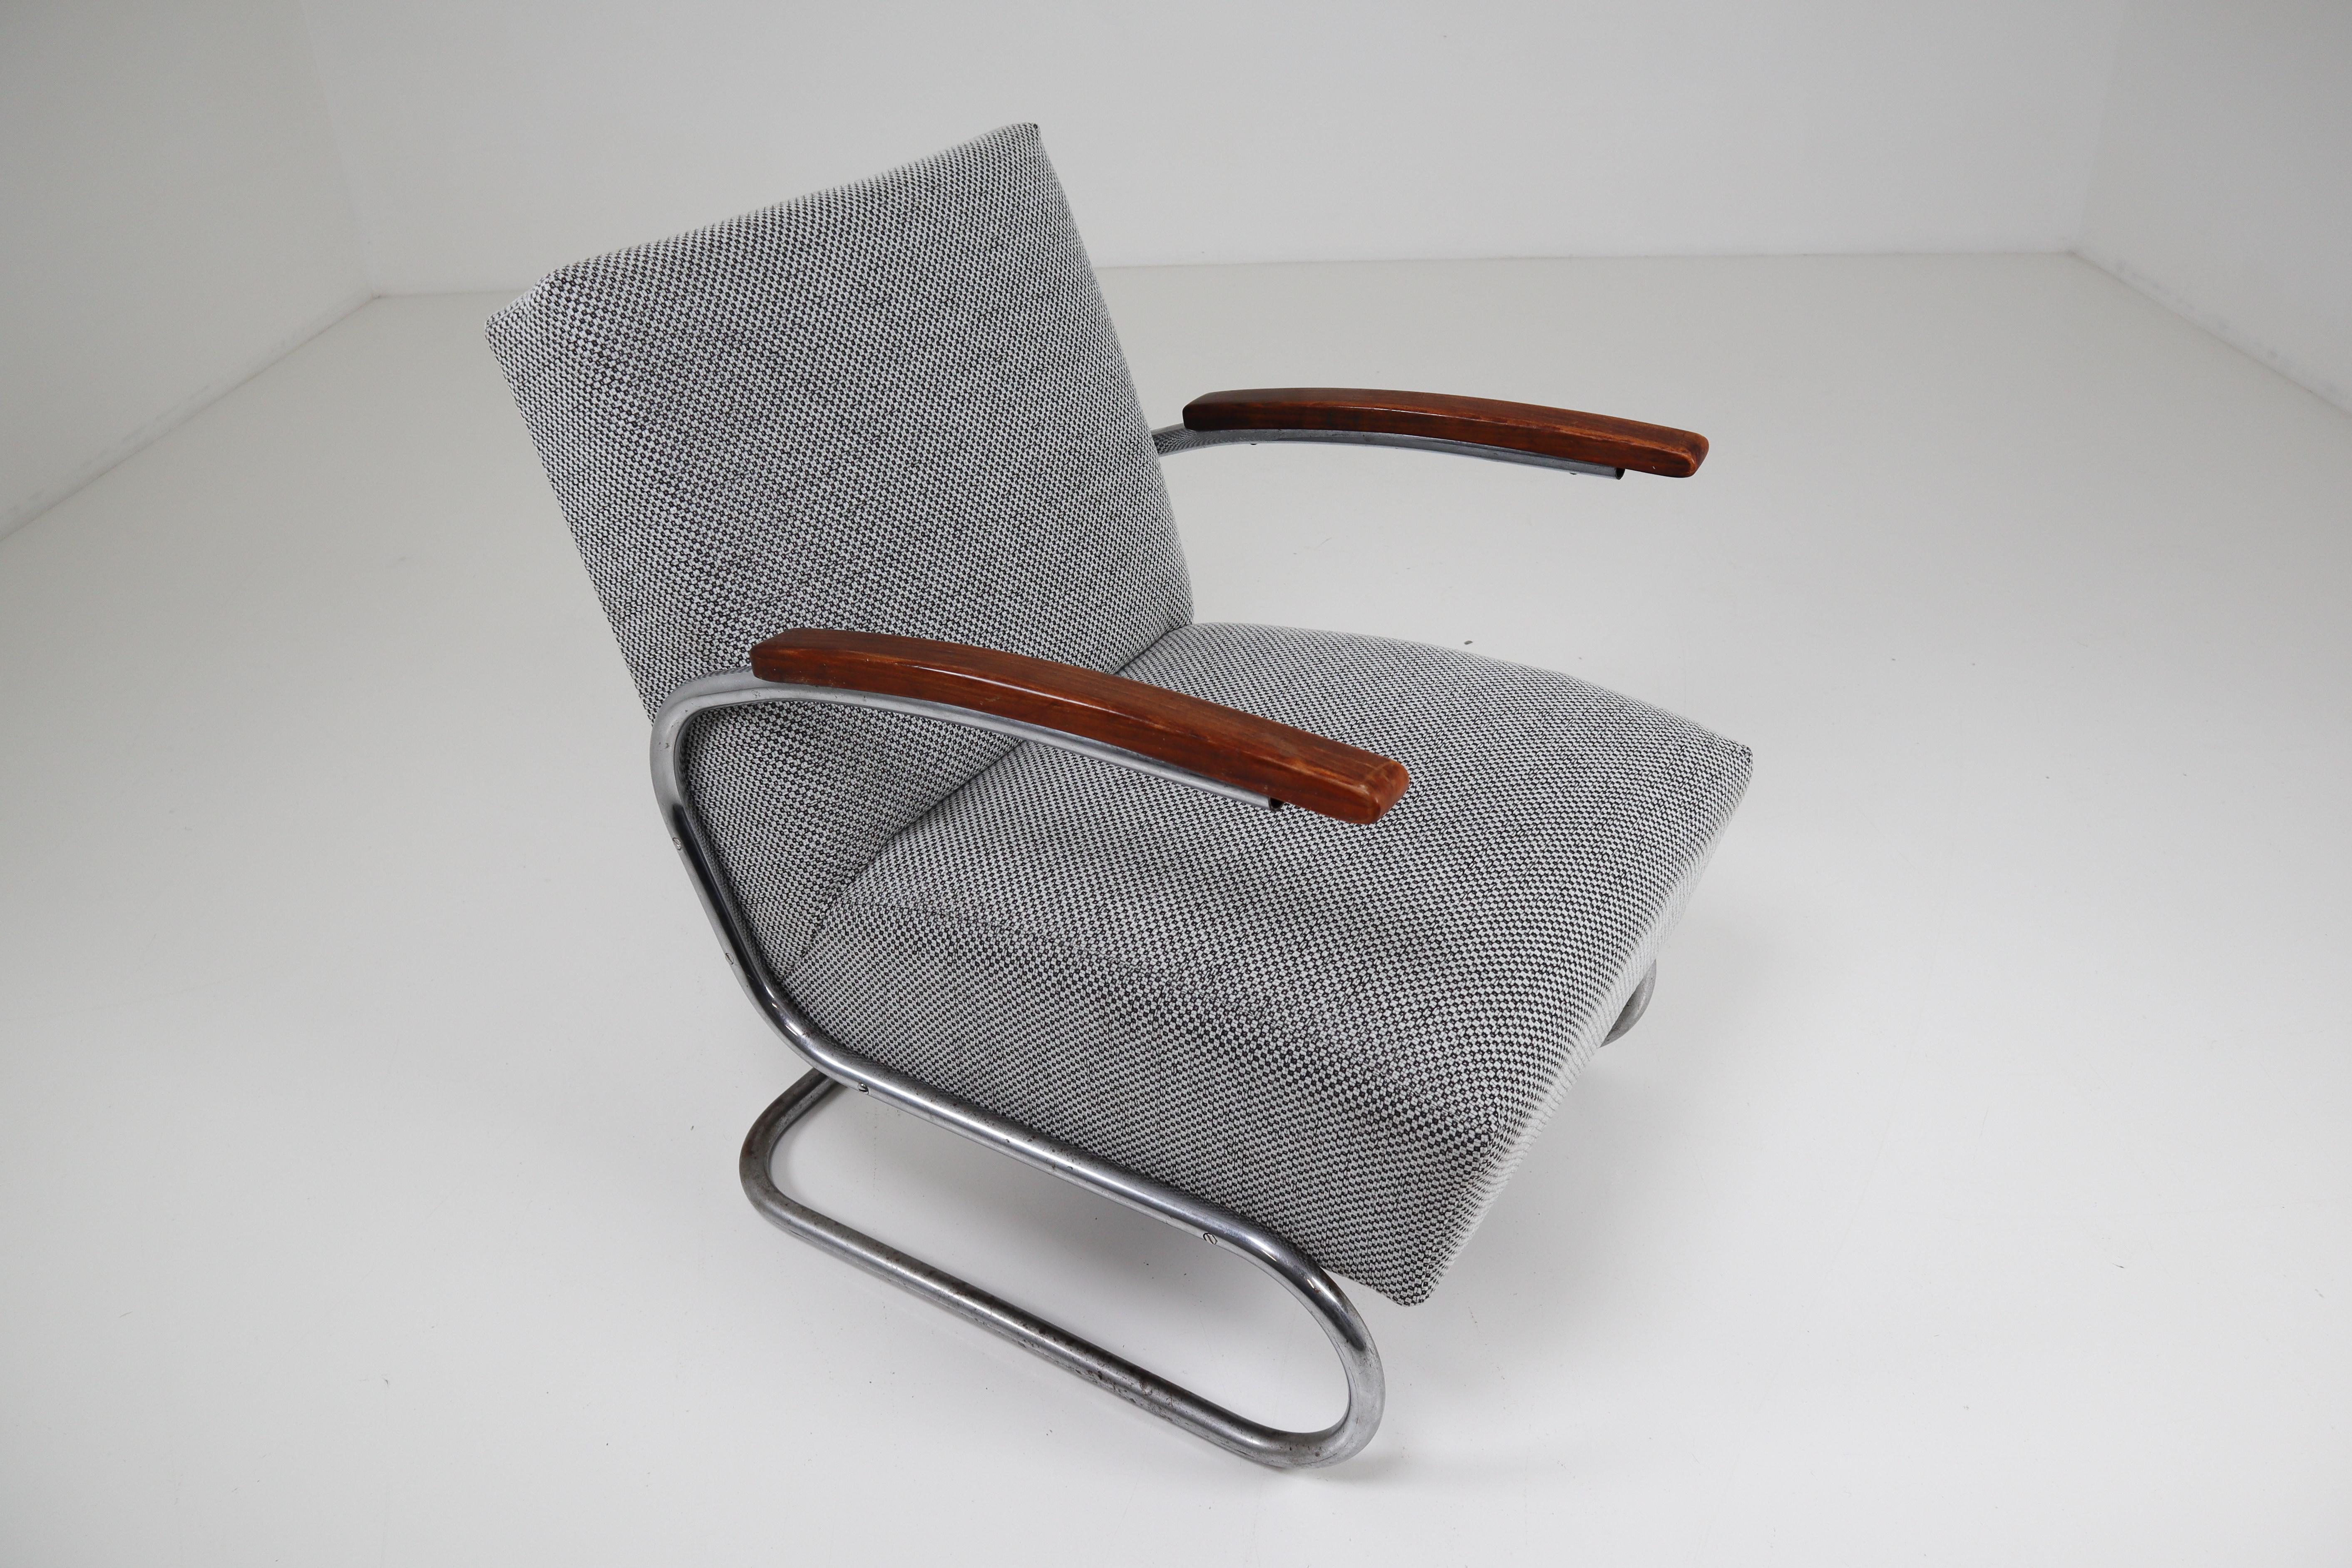 Chrome Steel Armchair by Thonet circa 1930s Midcentury Bauhaus Period (20. Jahrhundert)